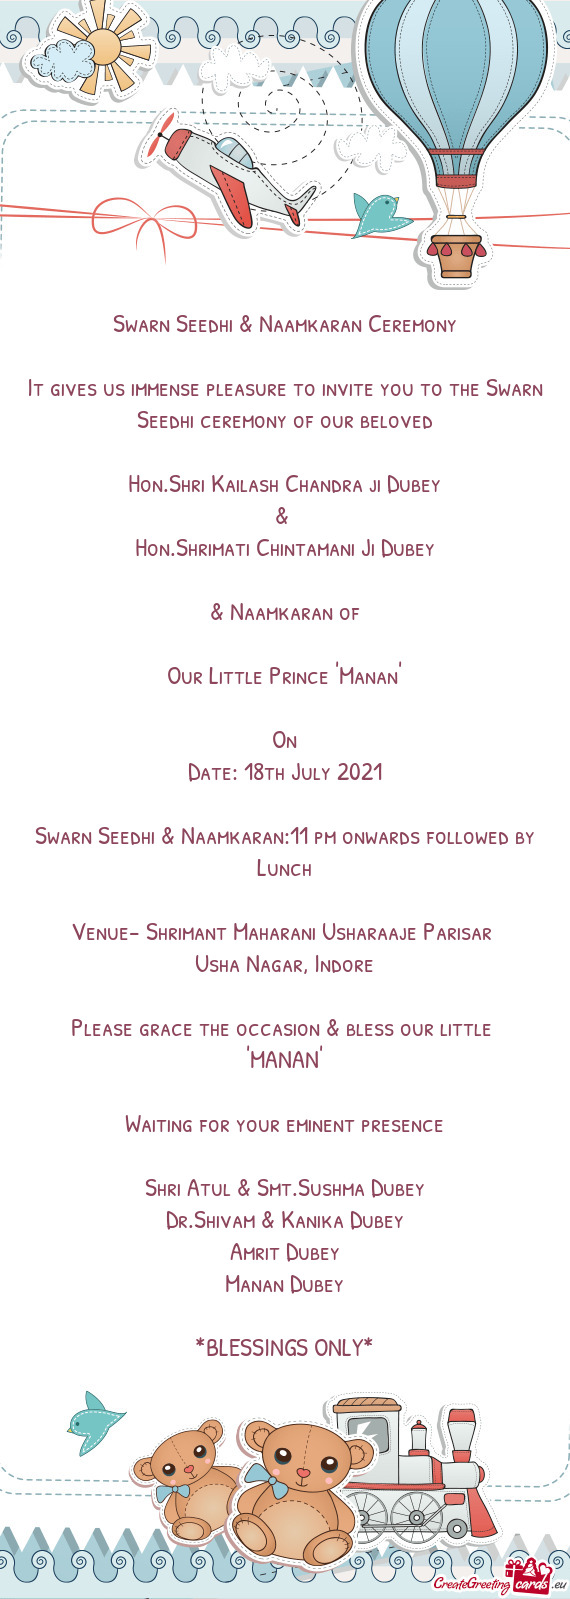 Swarn Seedhi & Naamkaran Ceremony